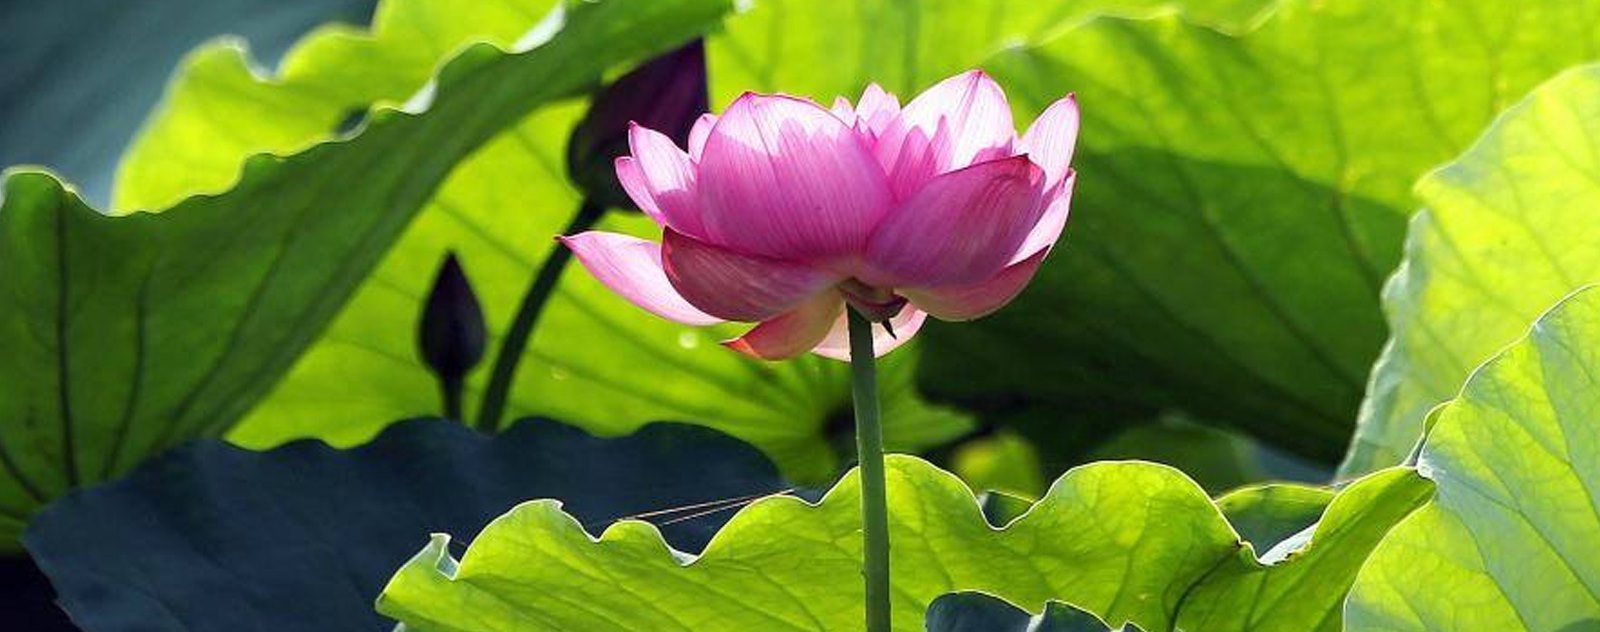 Fleur de lotus sacré